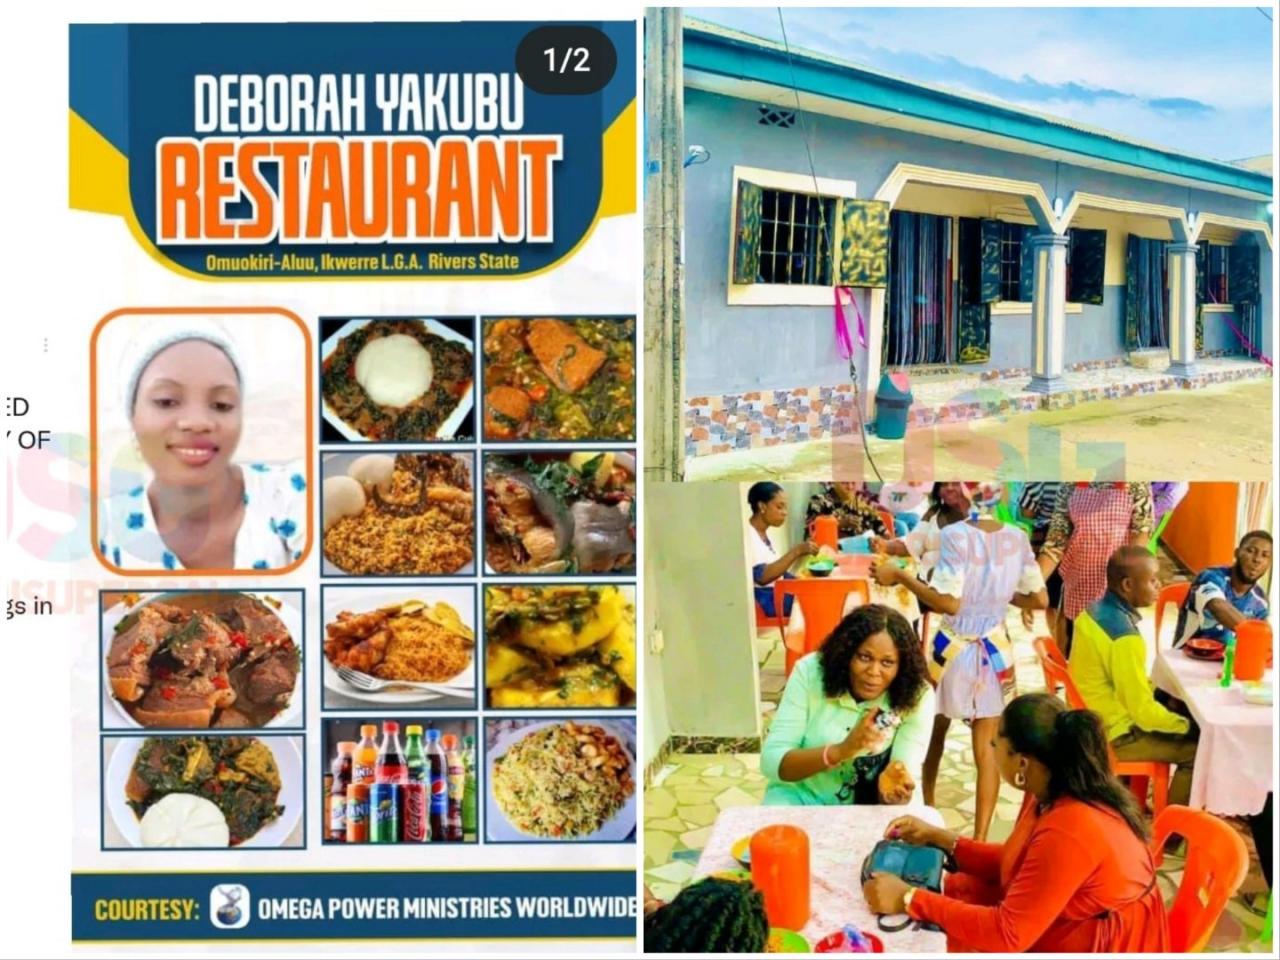 Apostle Chibuzor Chinyere donates exquisite restaurant to family of Deborah Yakubu killed at Shehu Shagari College of Education